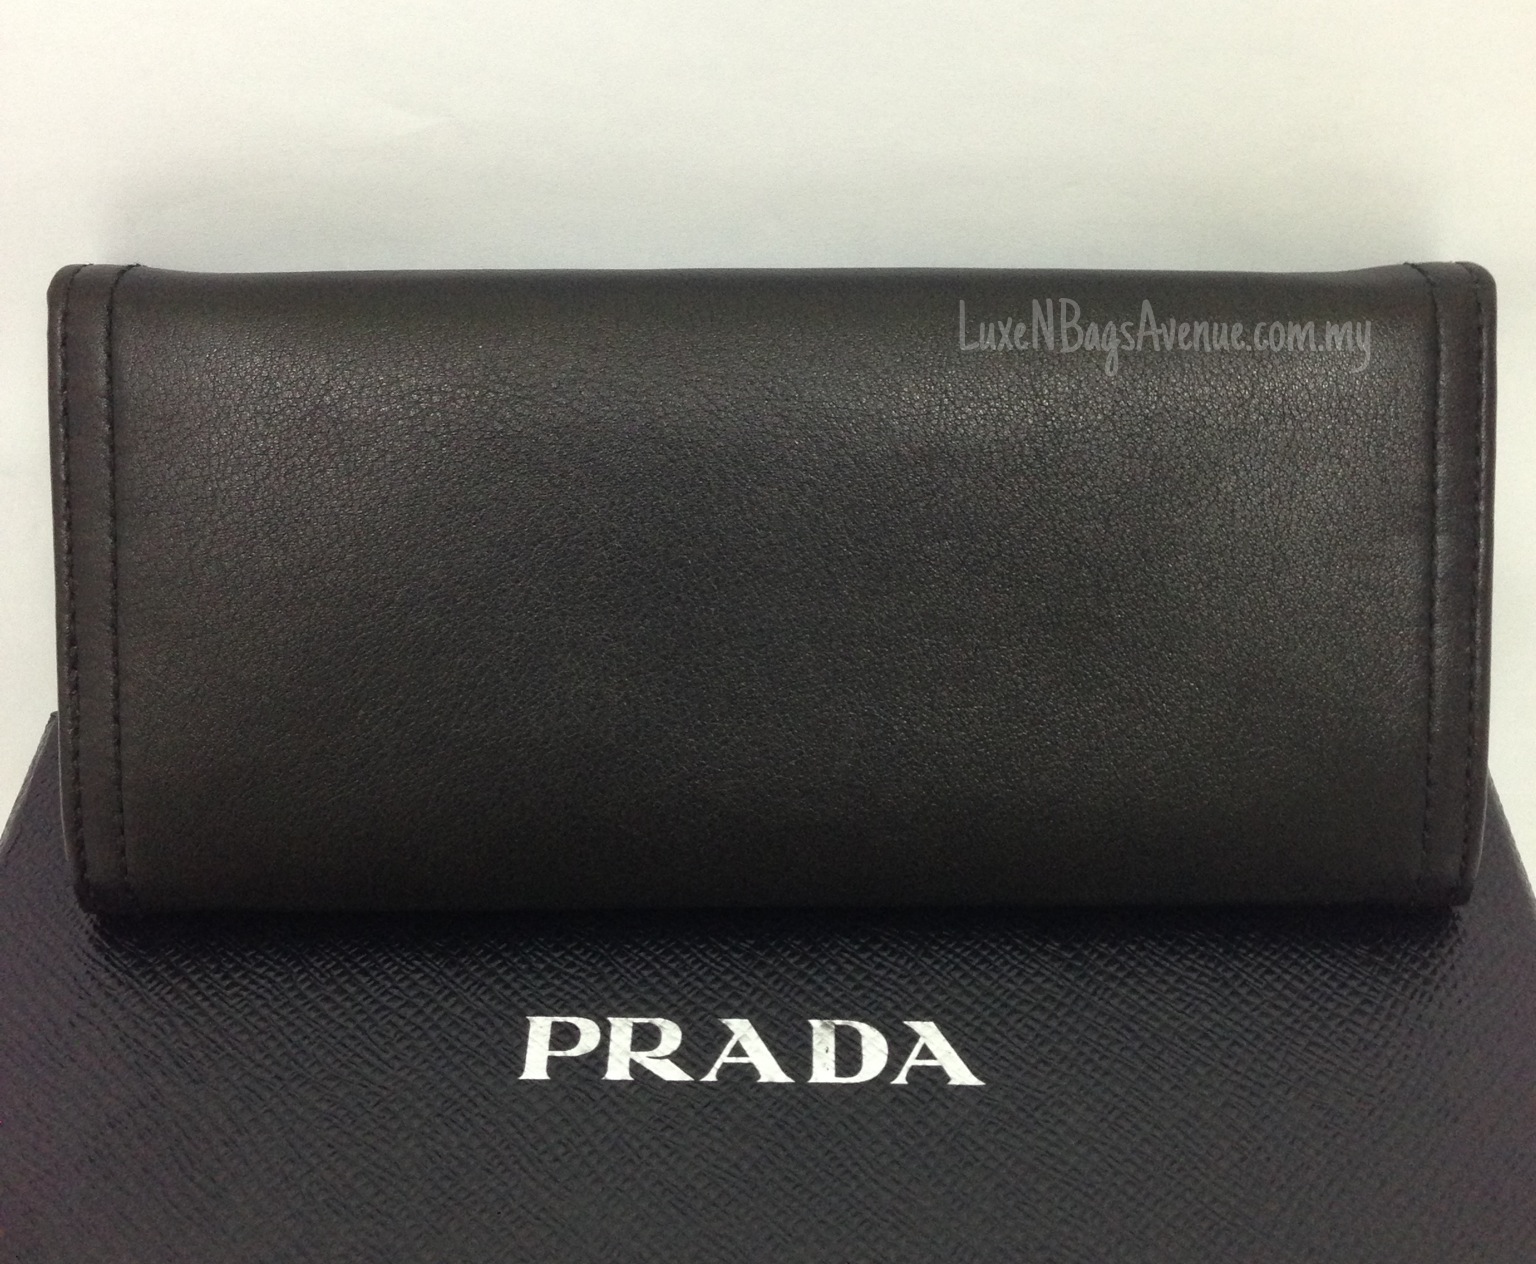 LuxeNBagsAvenue.com.my: Prada 1M1132 Soft Calf Leather Wallet Nero/ Black